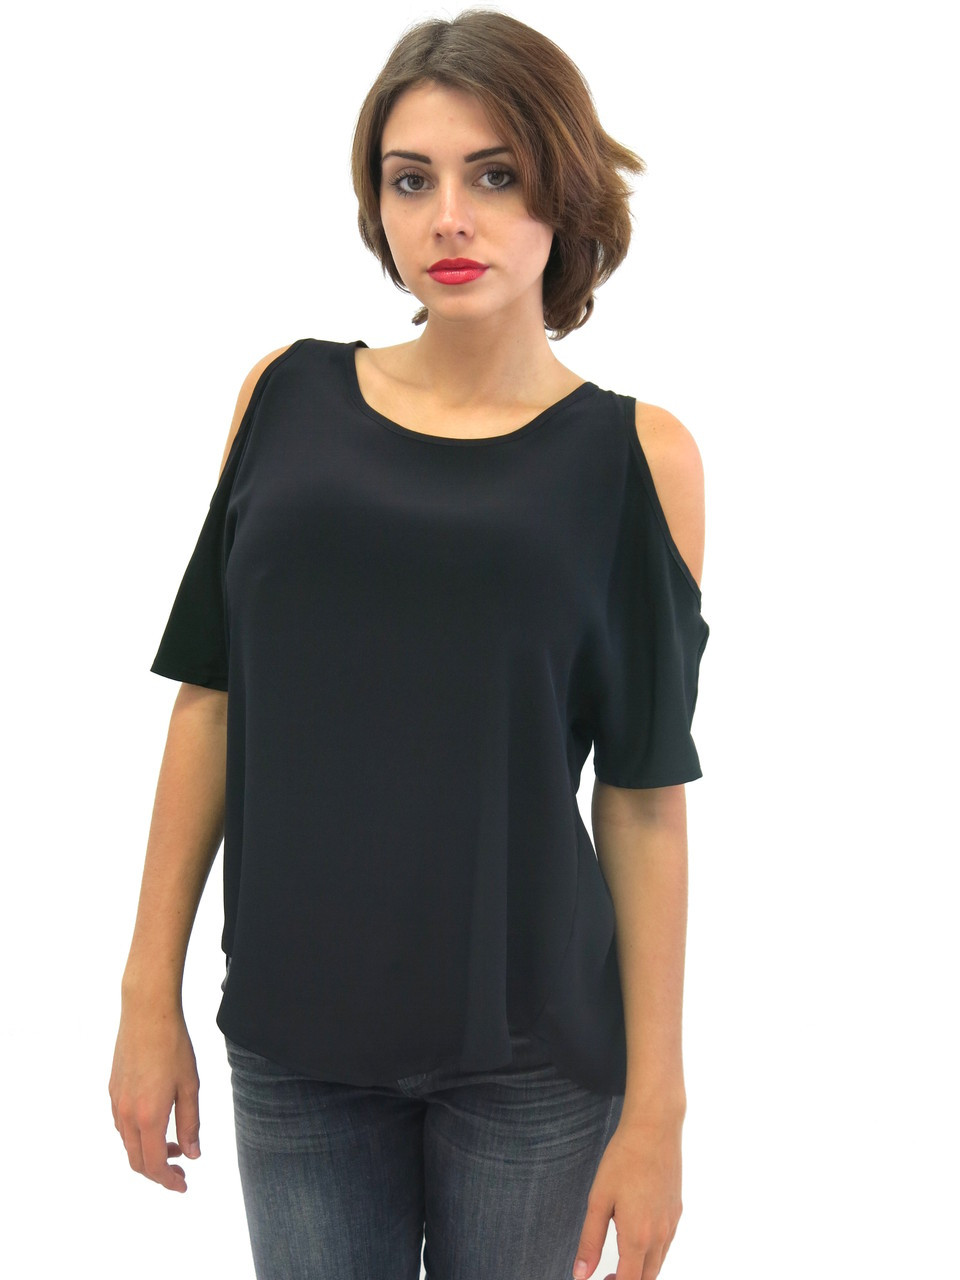 Karina Grimaldi Vesta Silk Zipper Top Black | Shop Boutique Flirt